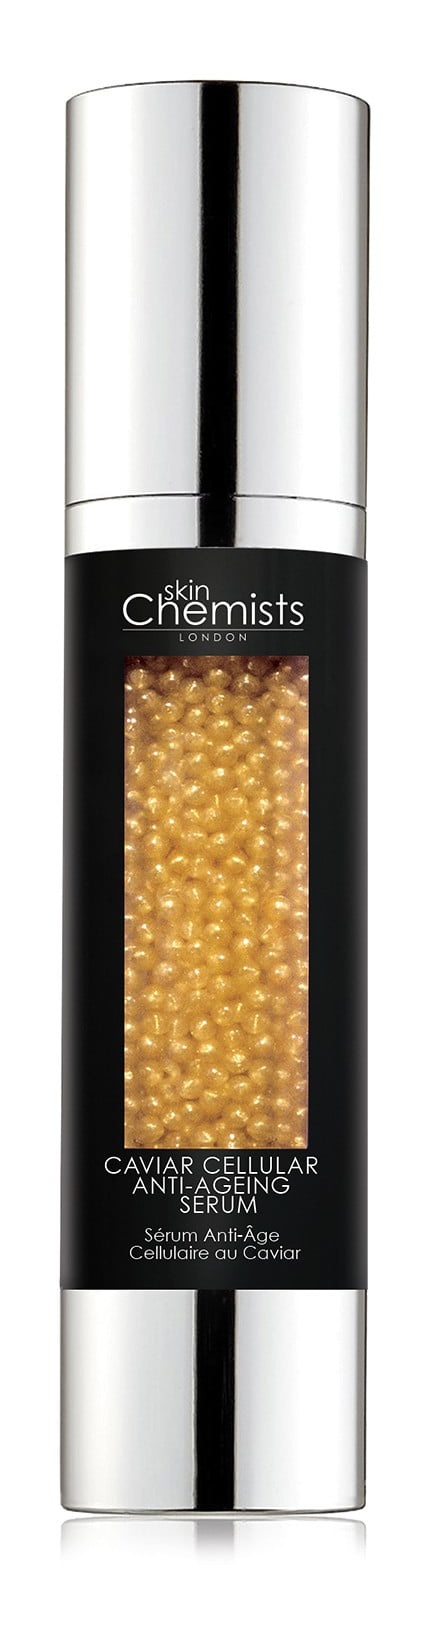 skinChemists Caviar Cellular Anti-Ageing Serum